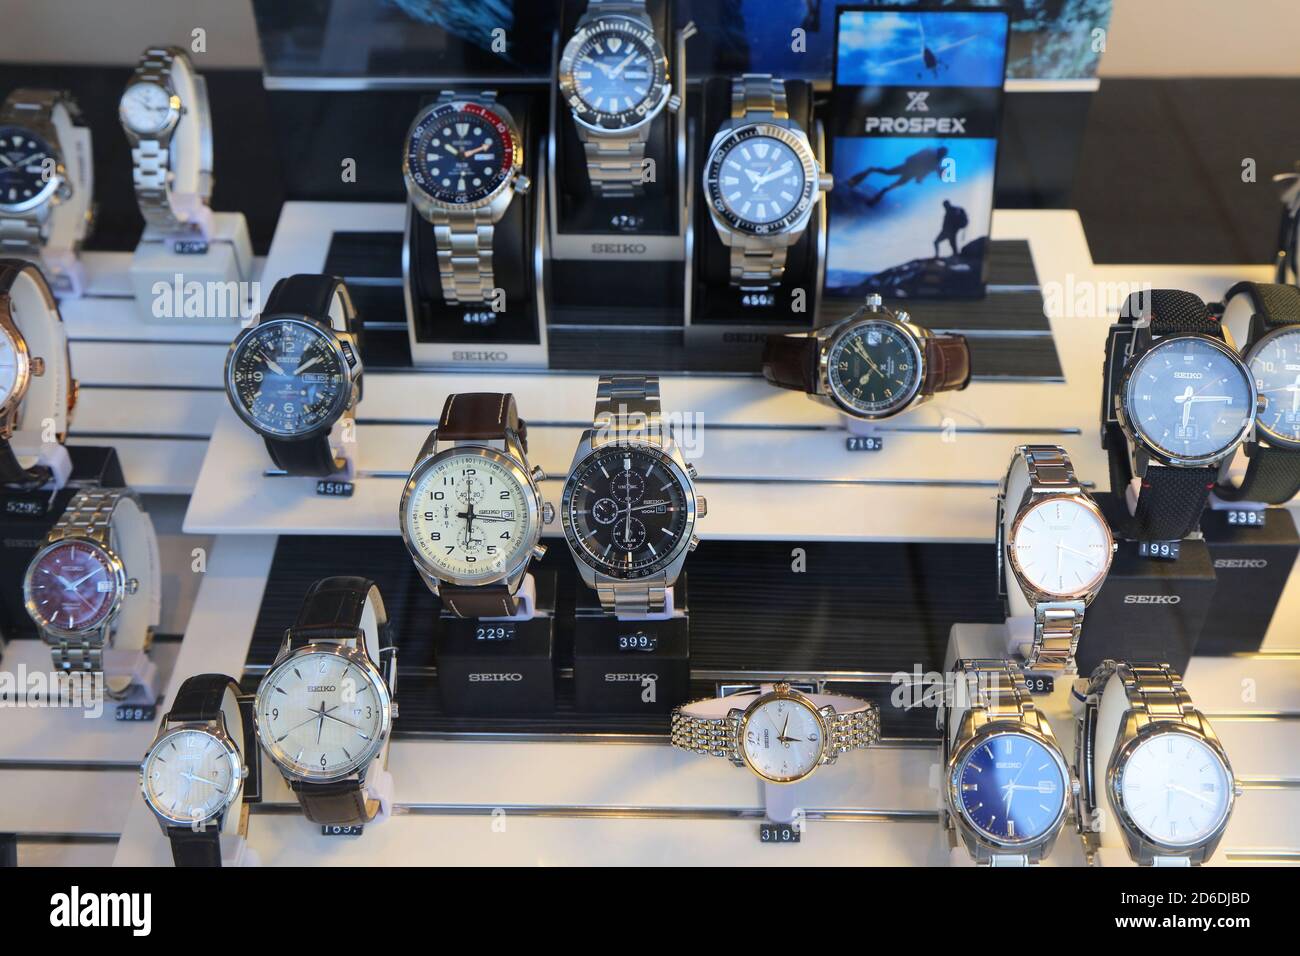 HERNE, GERMANY - SEPTEMBER 17, 2020: Seiko brand wrist watches on display  in a store in Herne, Germany. Seiko is a Japanese company known for  timepiec Stock Photo - Alamy